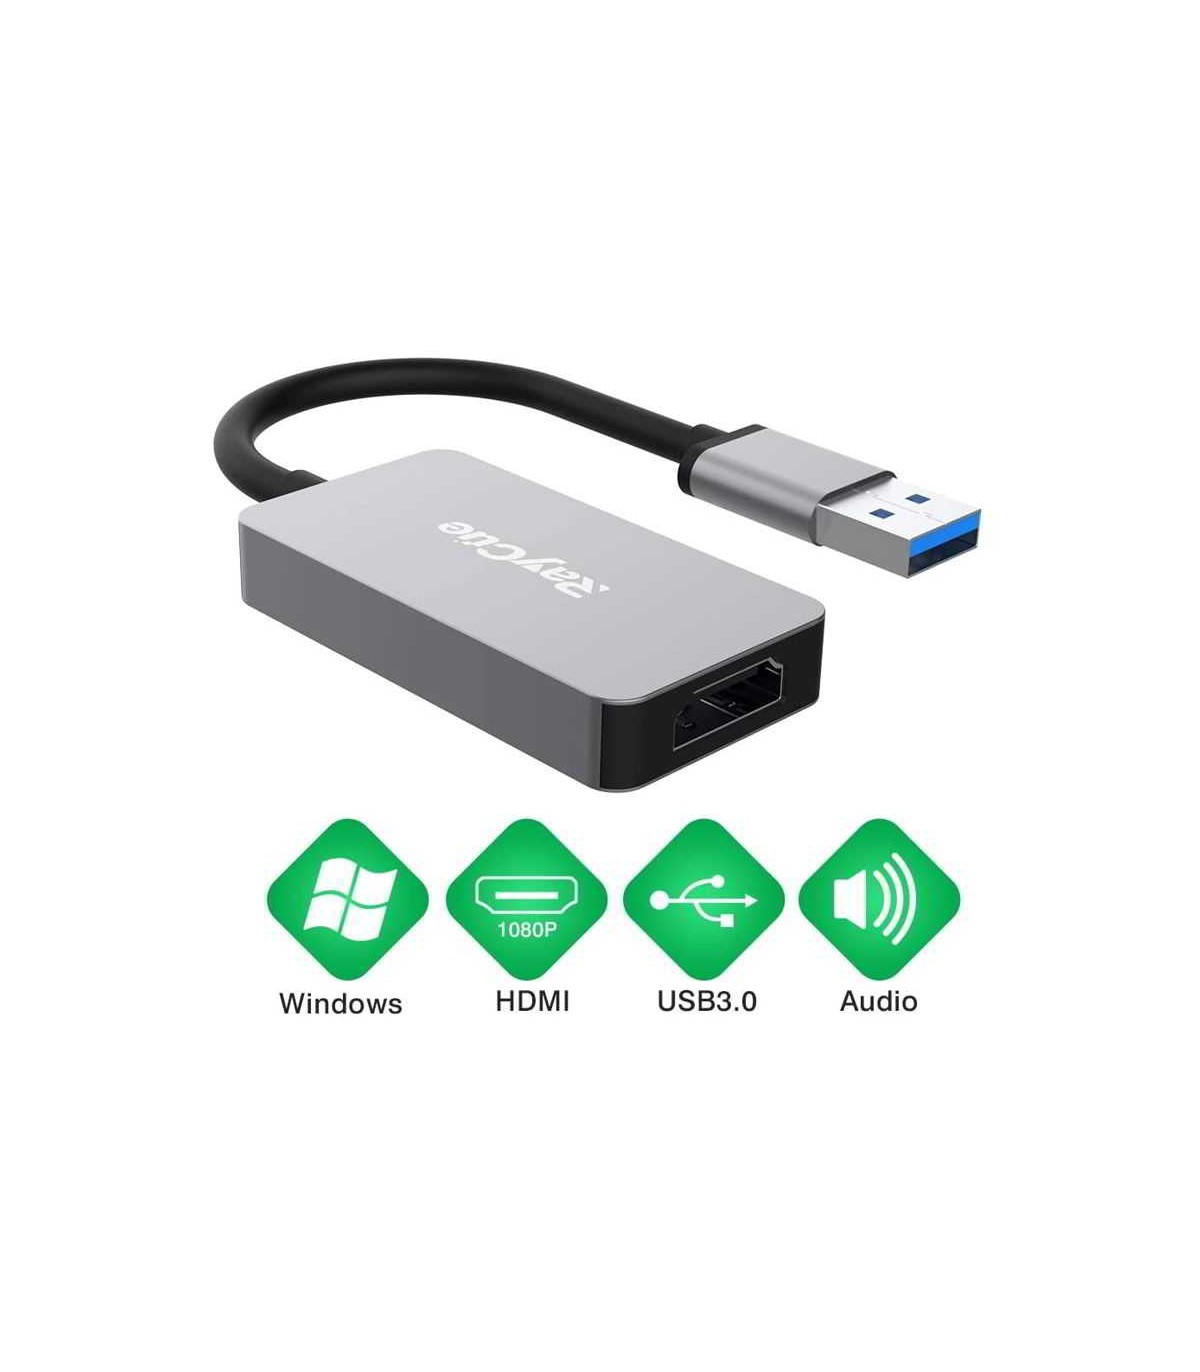 AB-HDMI-USB-021-US ADAPTADOR USB A HDMI, USB 3.0/2.0 A HDMI 1080P -  Convertidores de Video - Camaras de Seguridad Y Control de Acceso